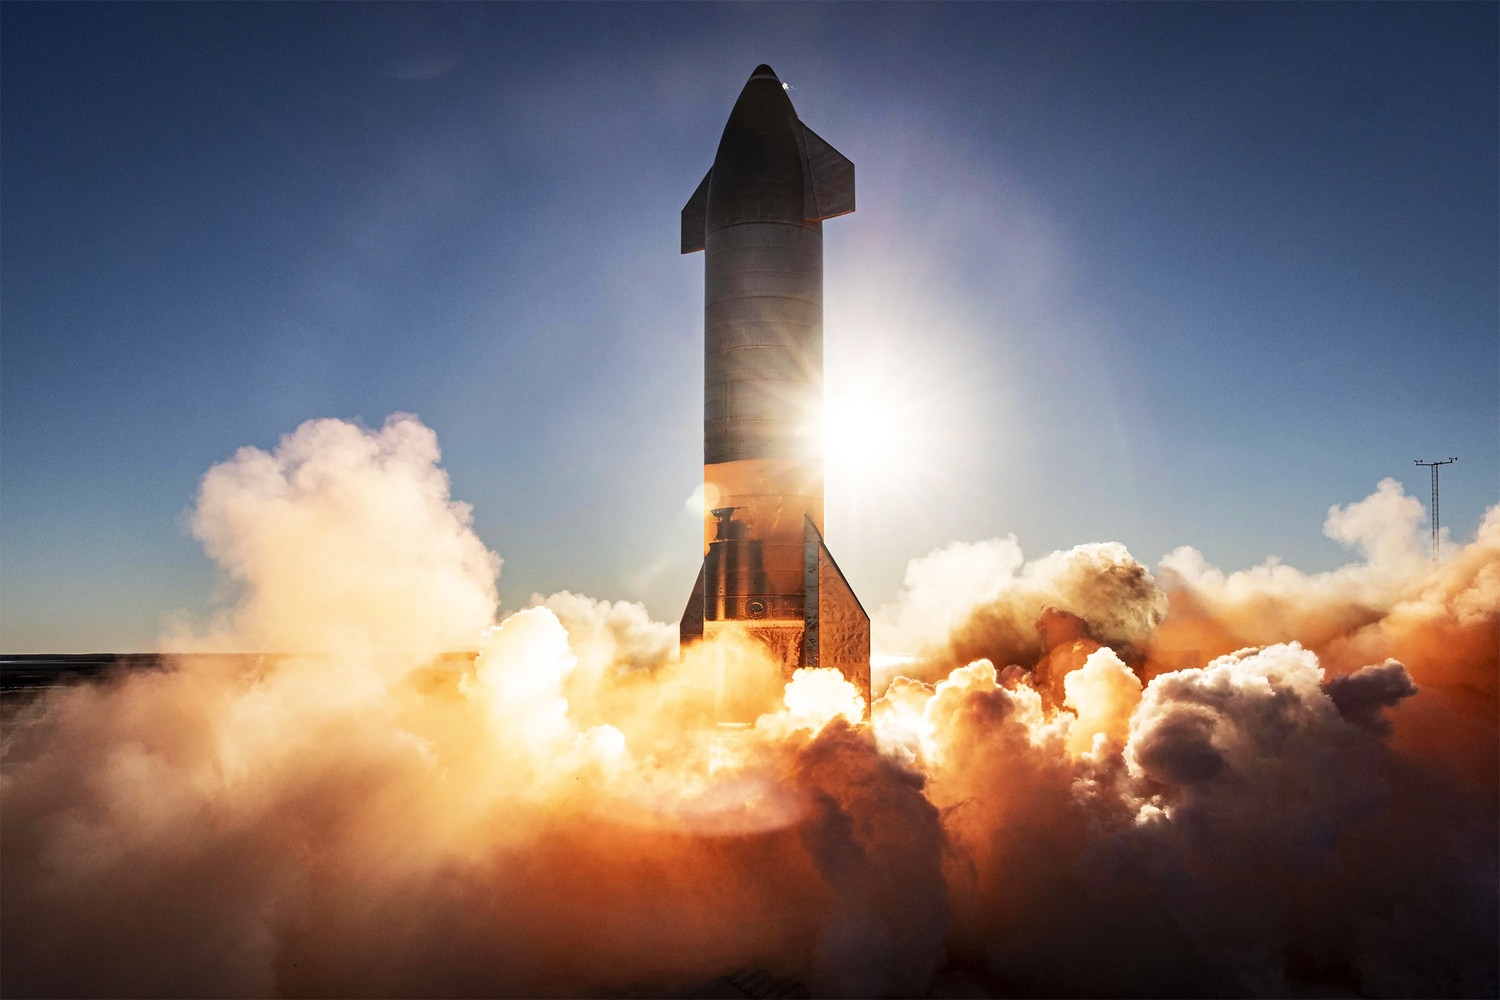 SpaceX успешно провела испытания ускорителей корабля Starship